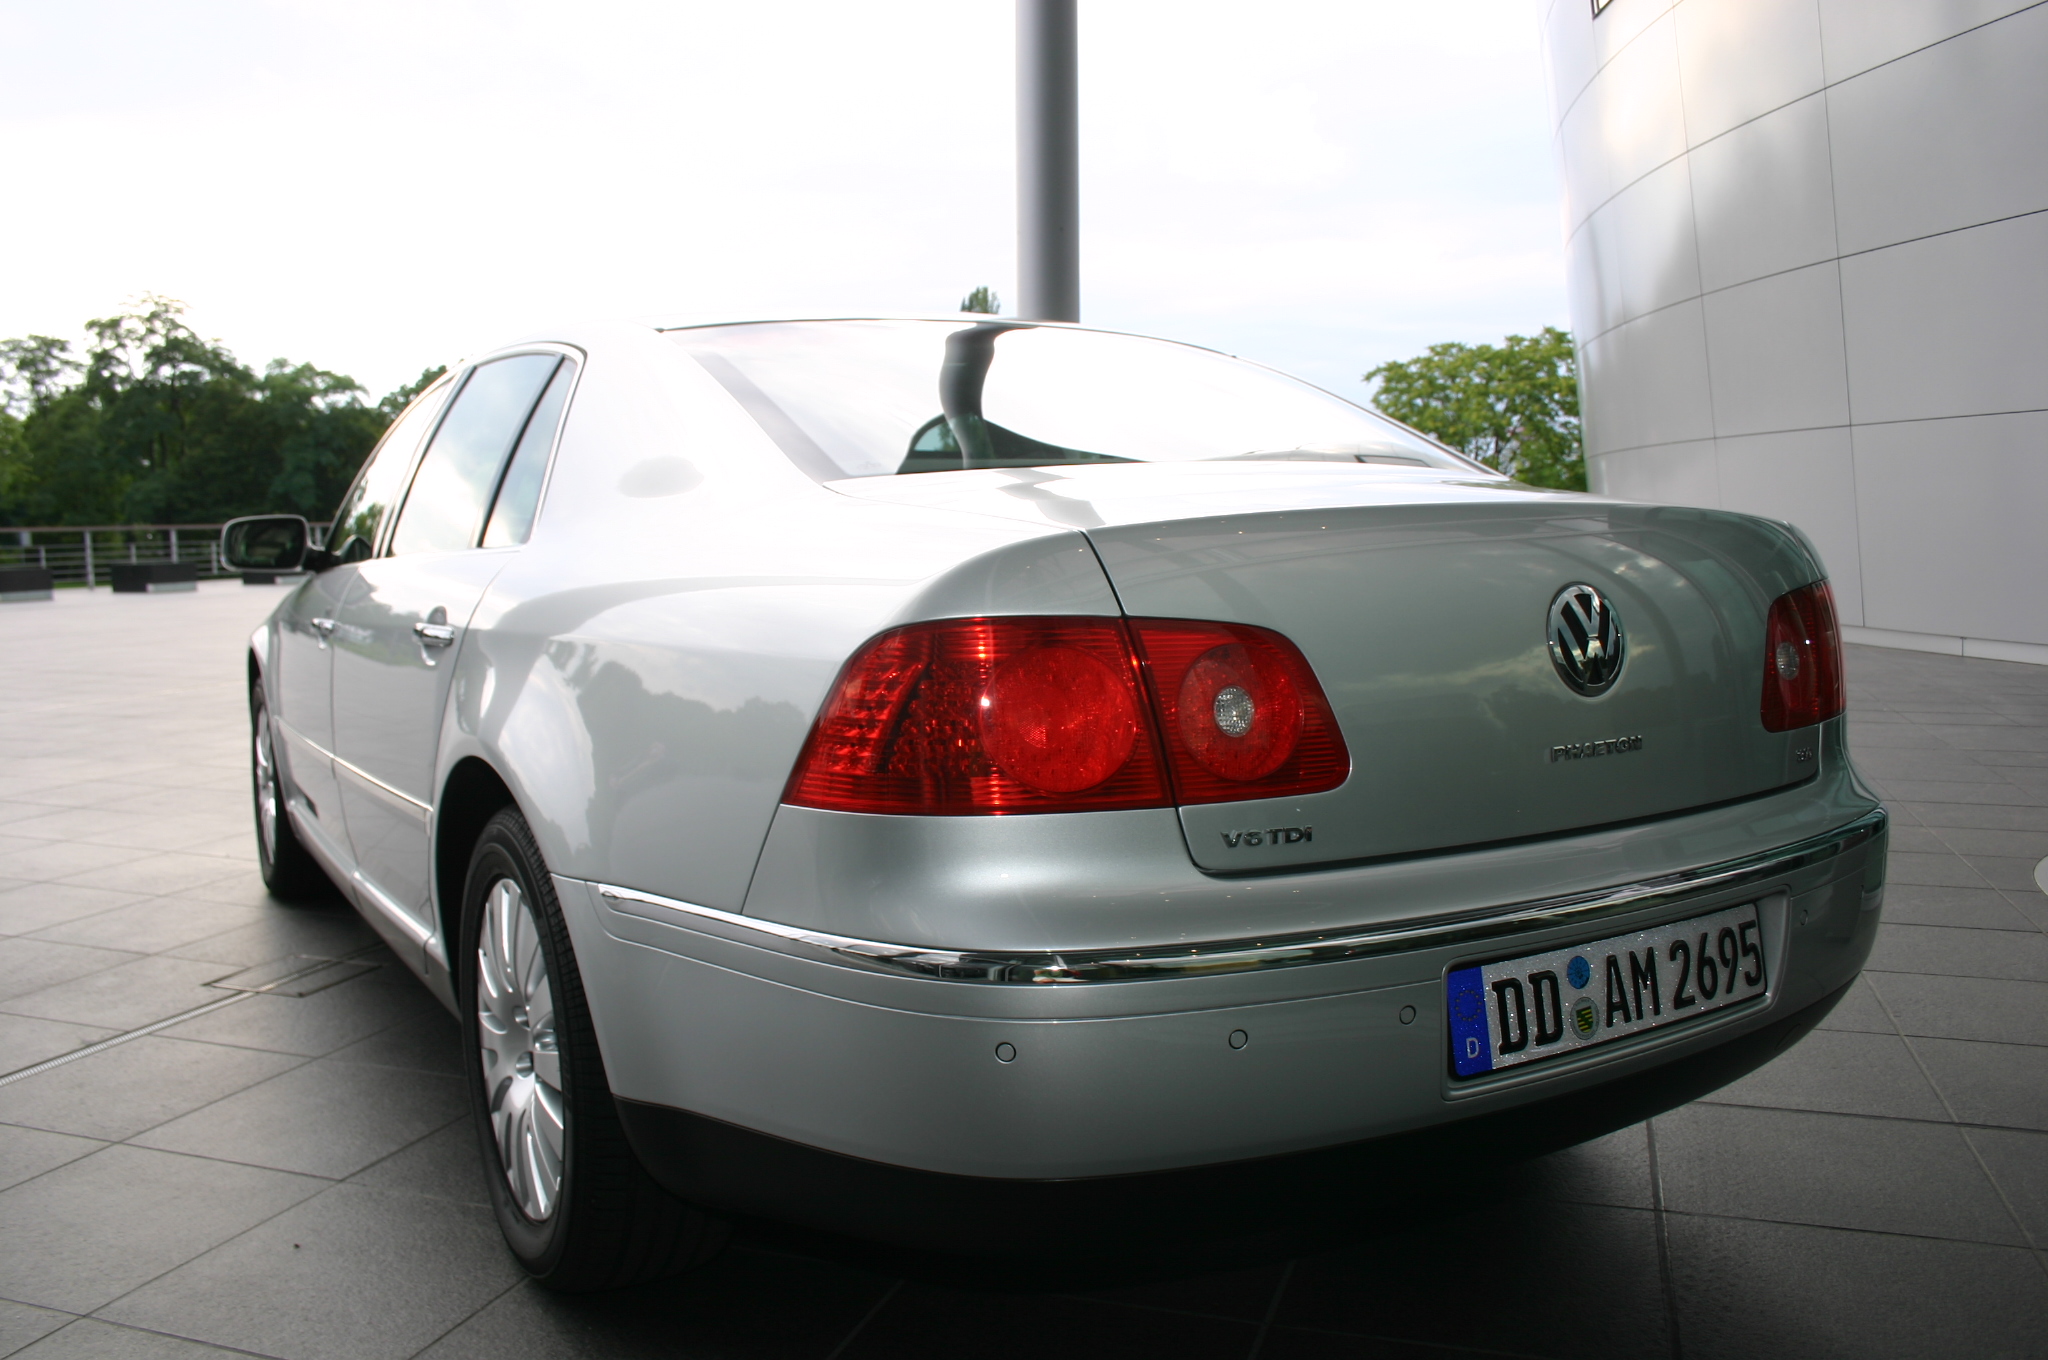 VW-Phaeton-silver-back